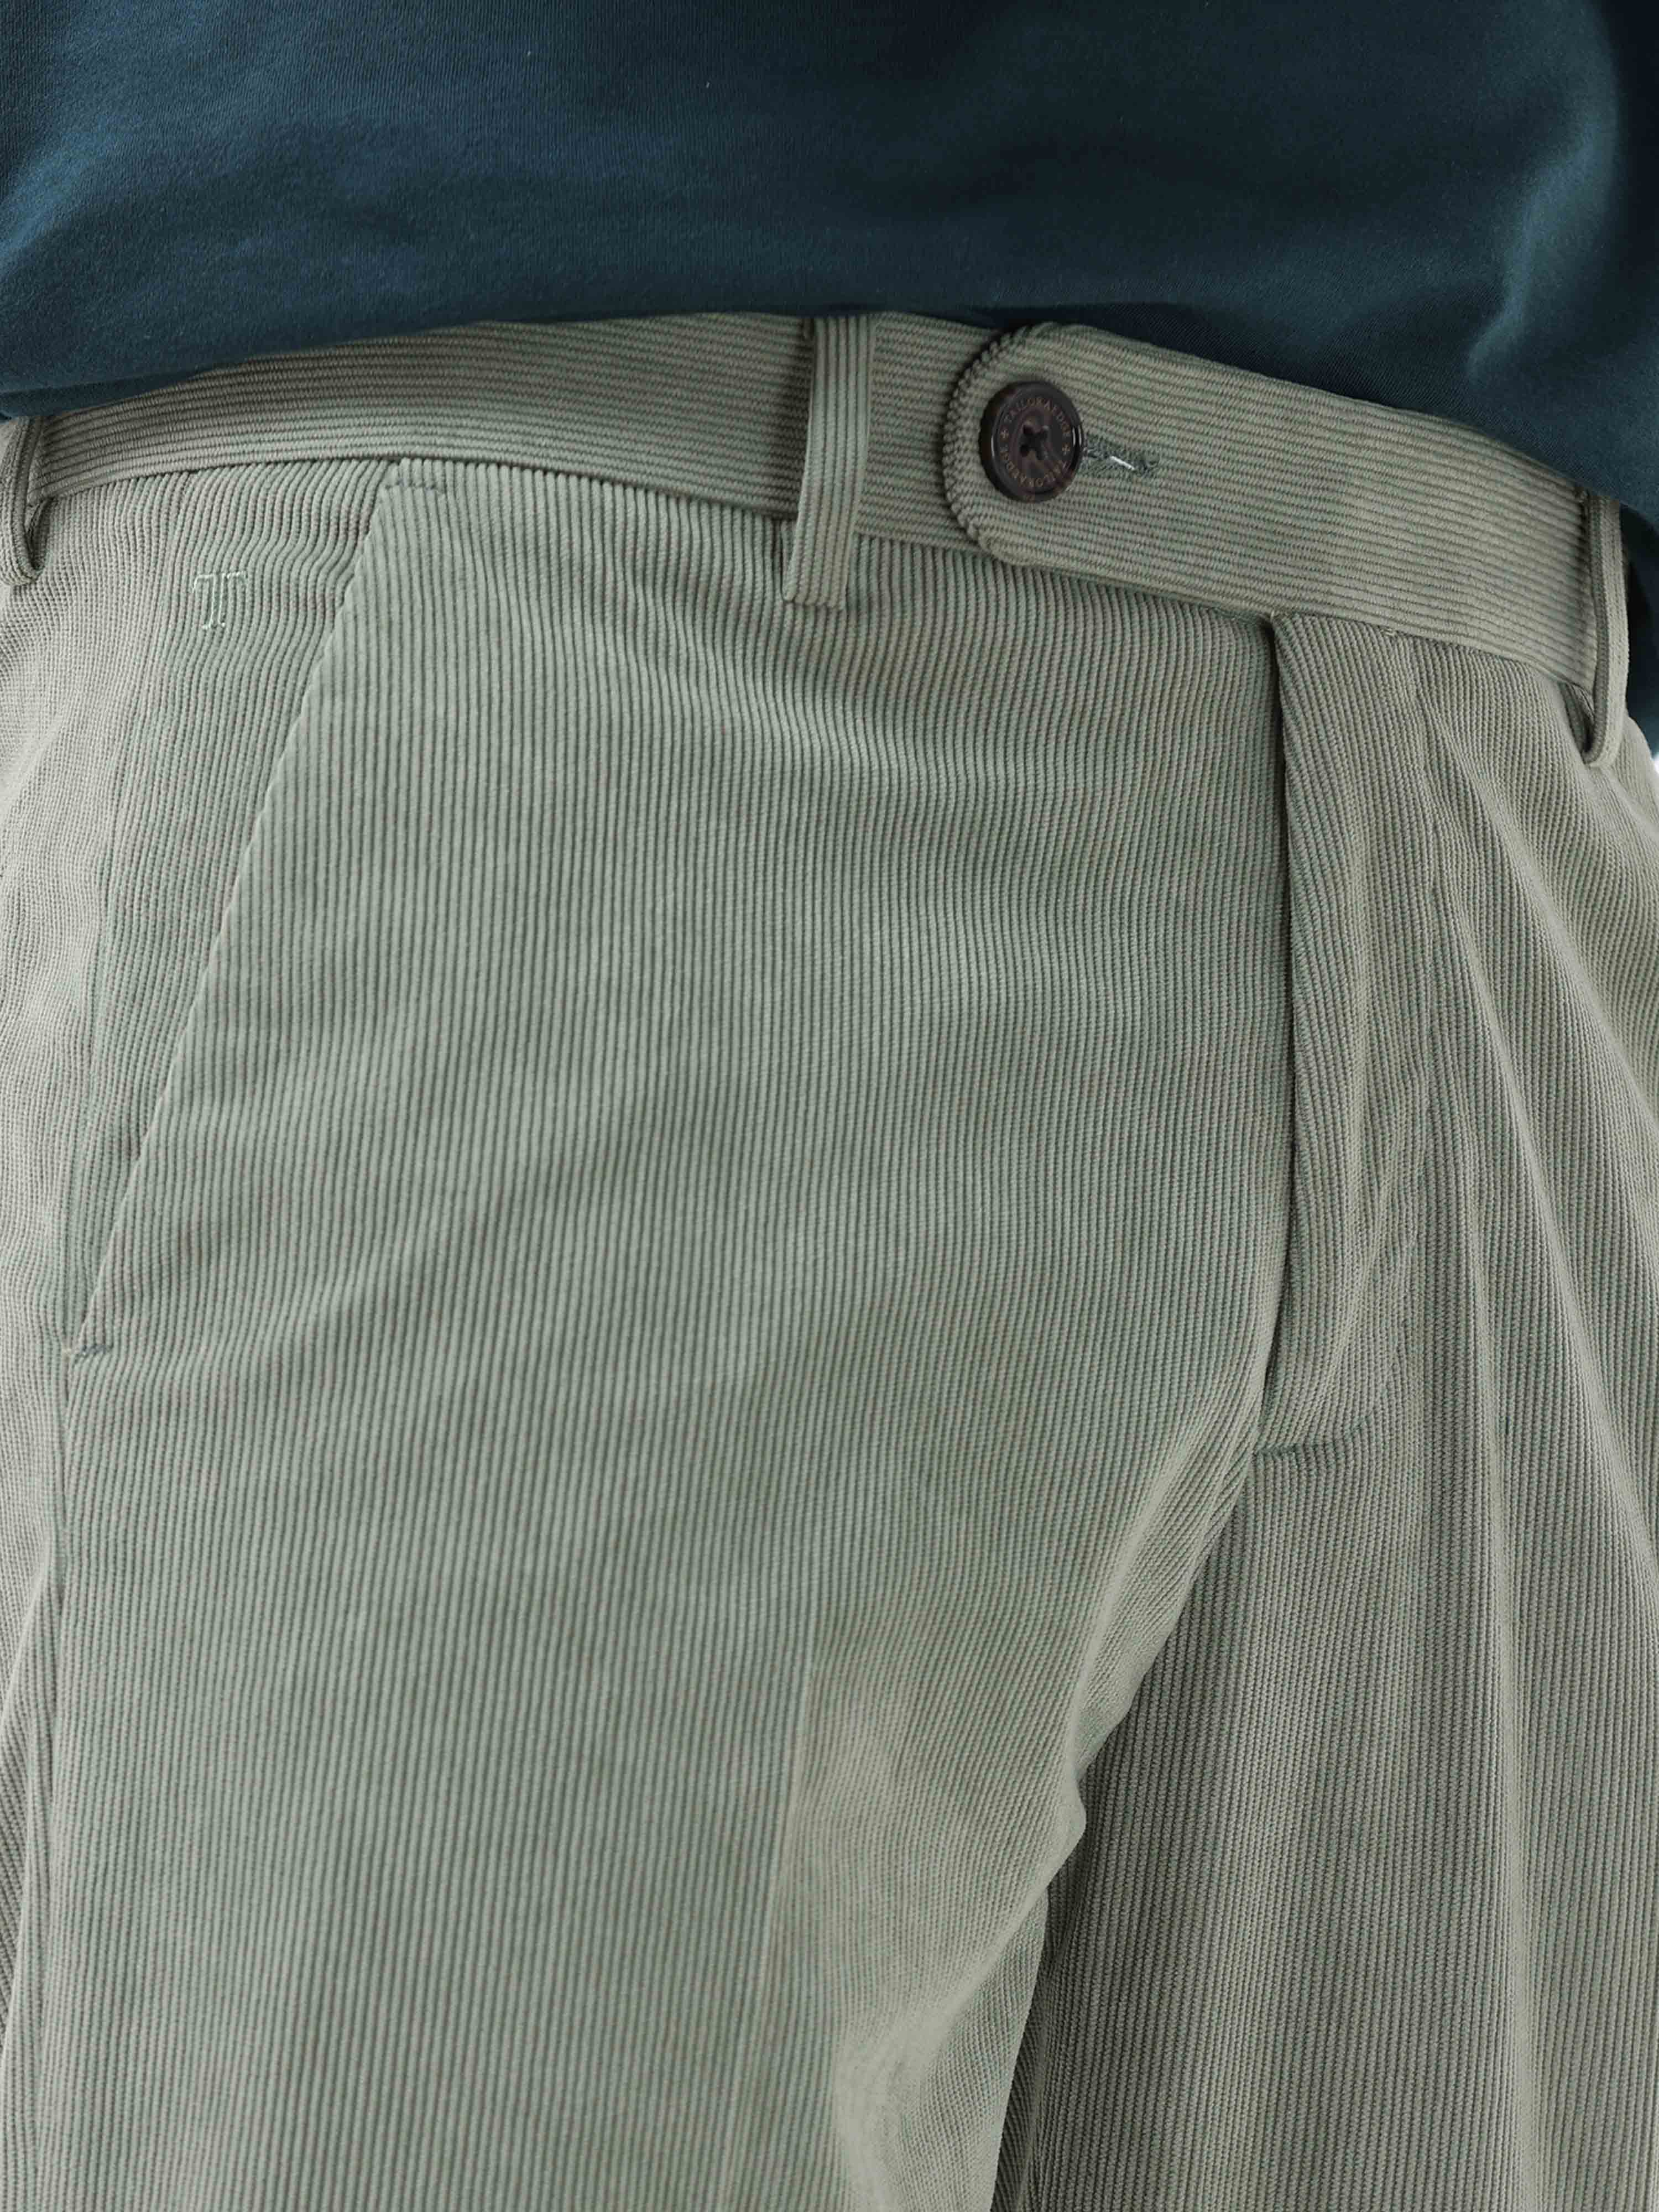 Mocha Brown Slim Fit Women's Casual Corduroy Trousers - Buy Online in India  @ Mehar